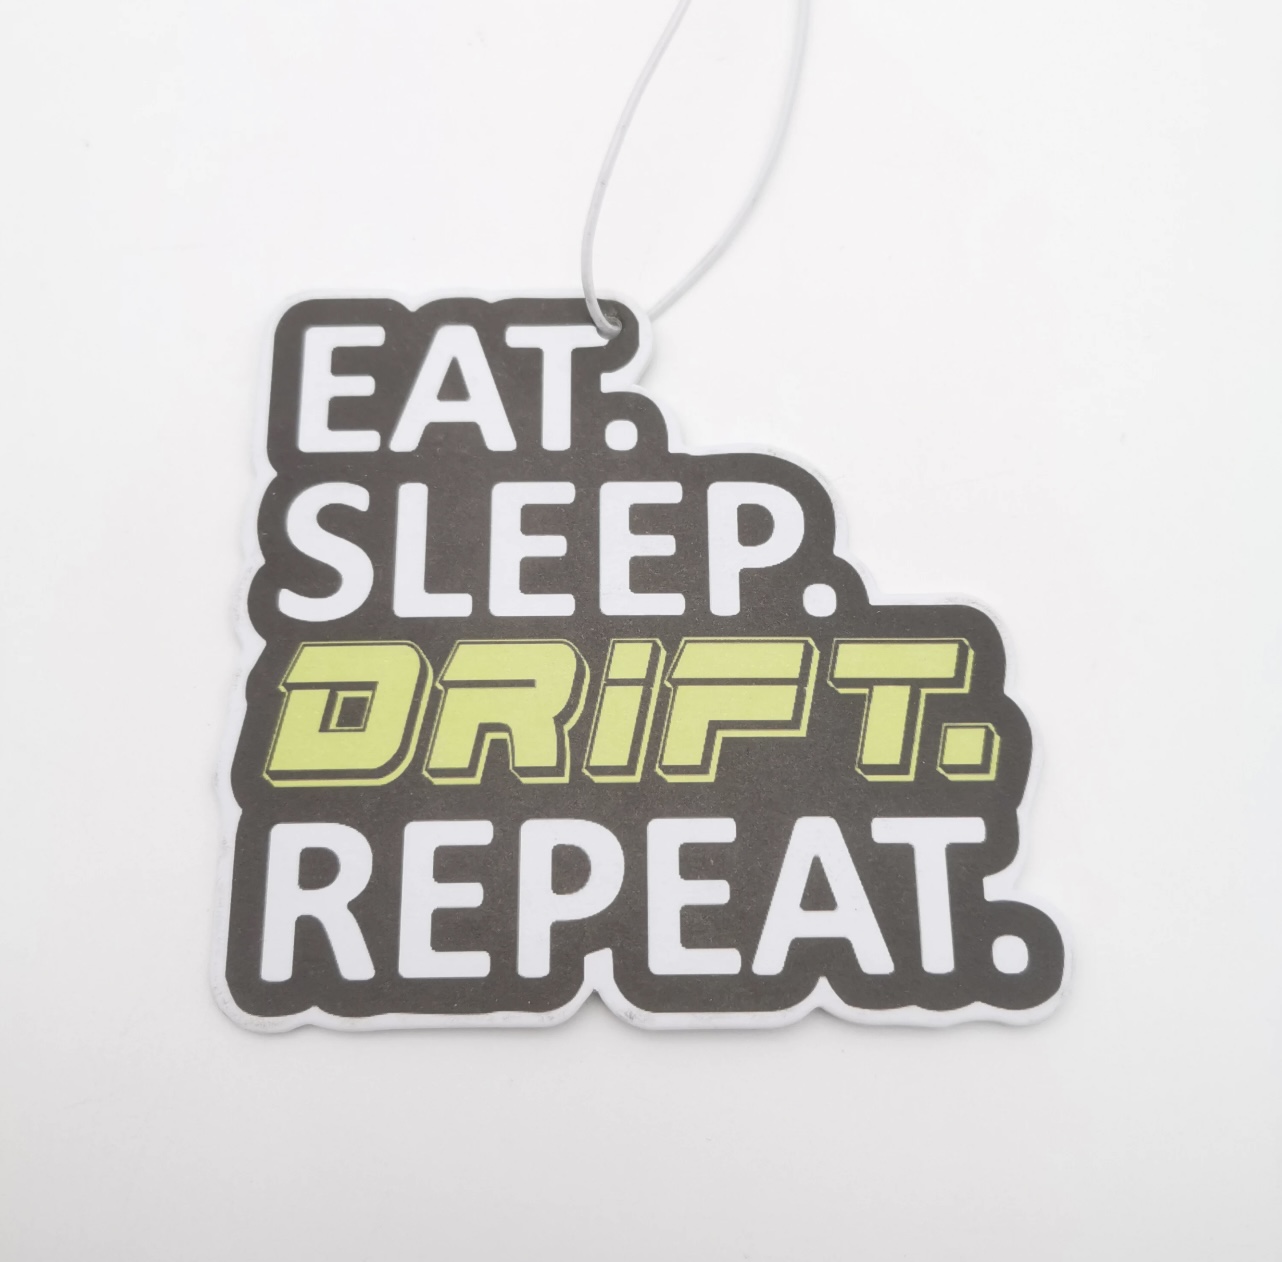 Doftis - Eat Sleep Drift Repeat